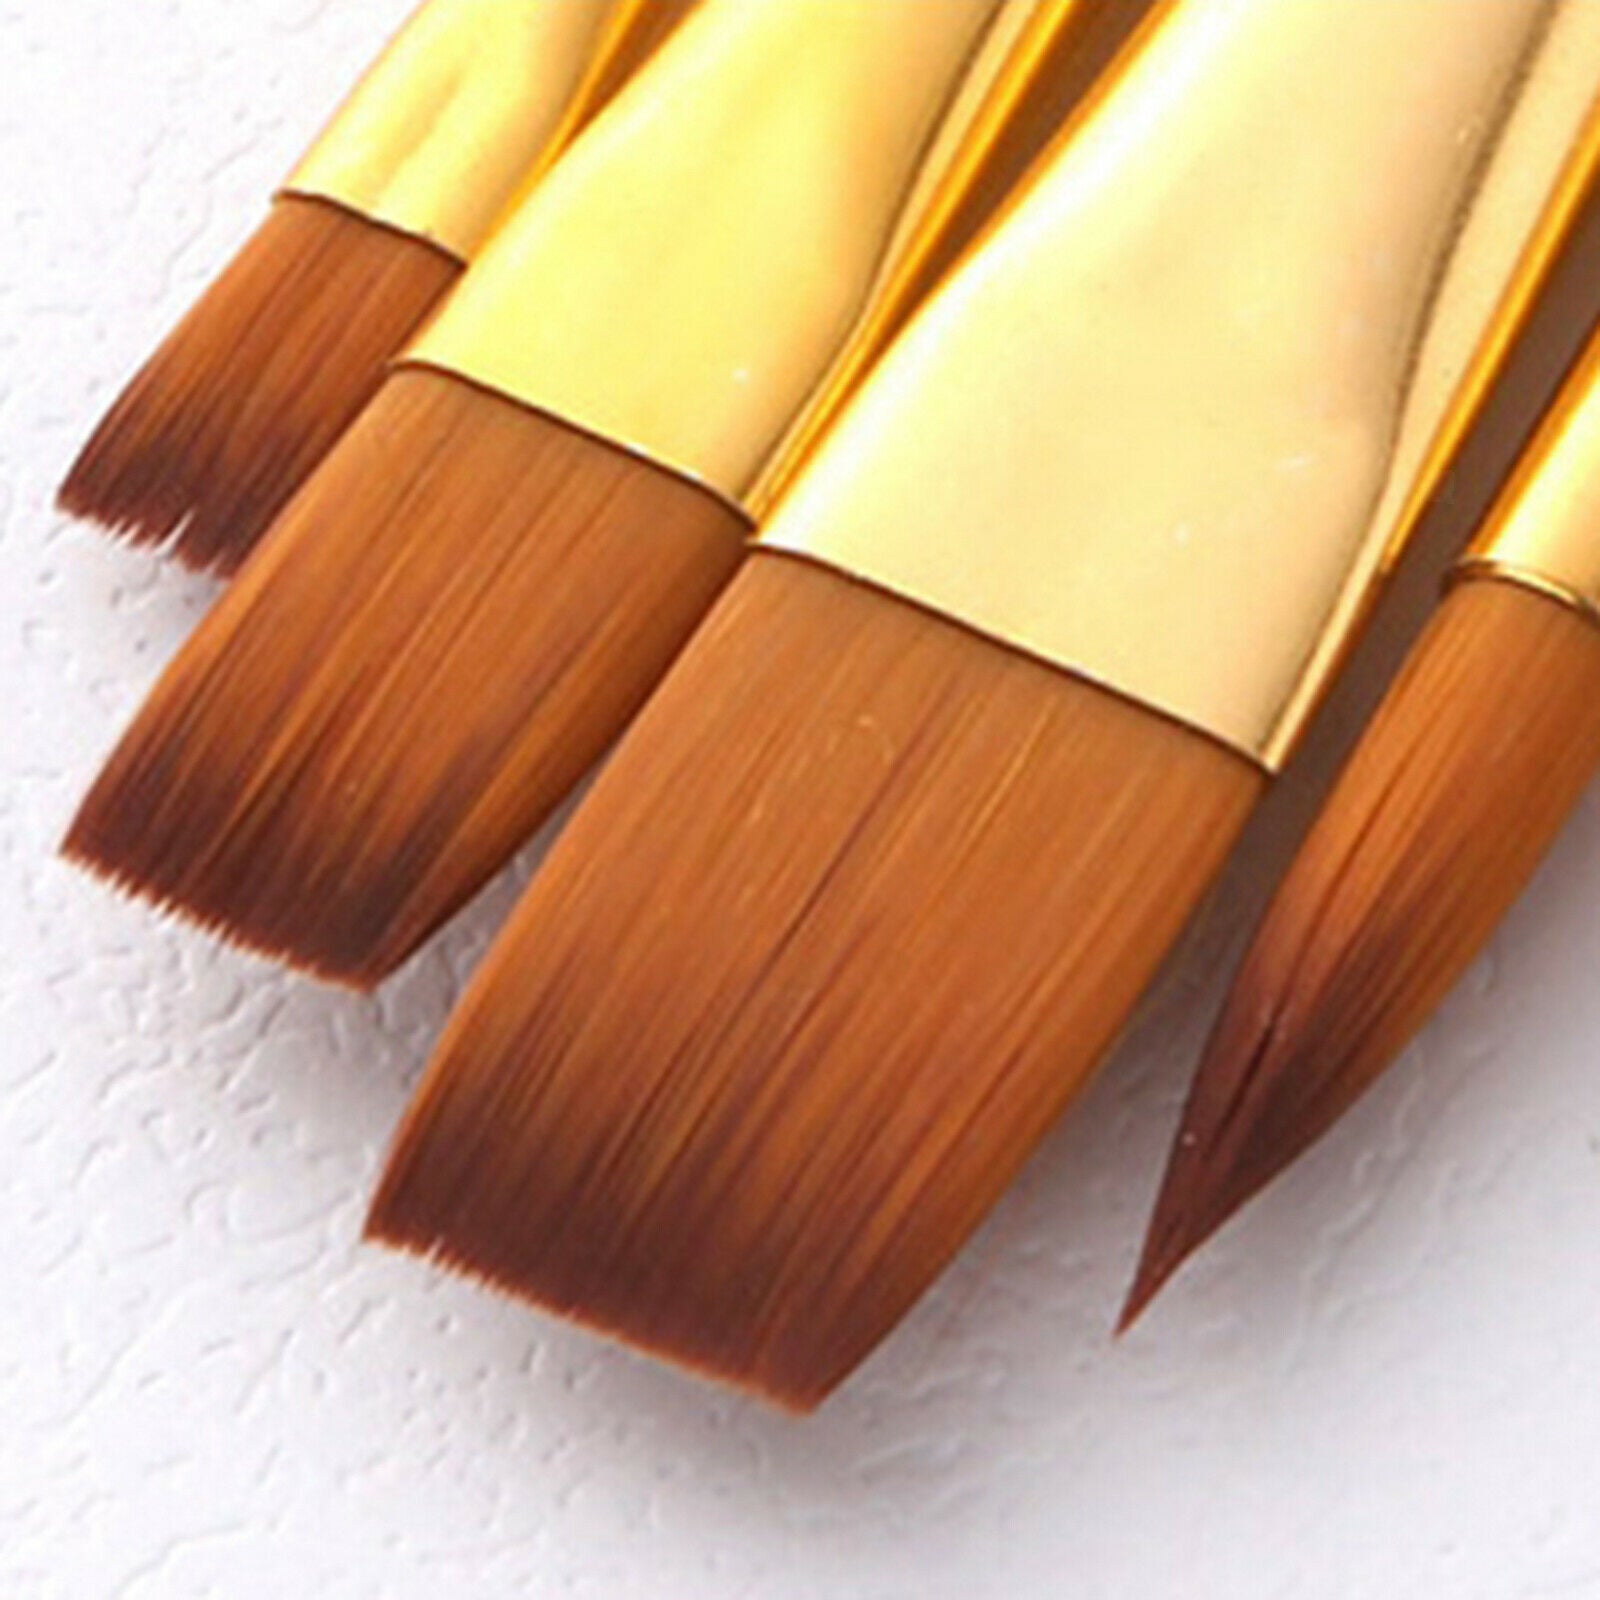 6x nylon hair artist brushes acrylic watercolor oil painting art craft